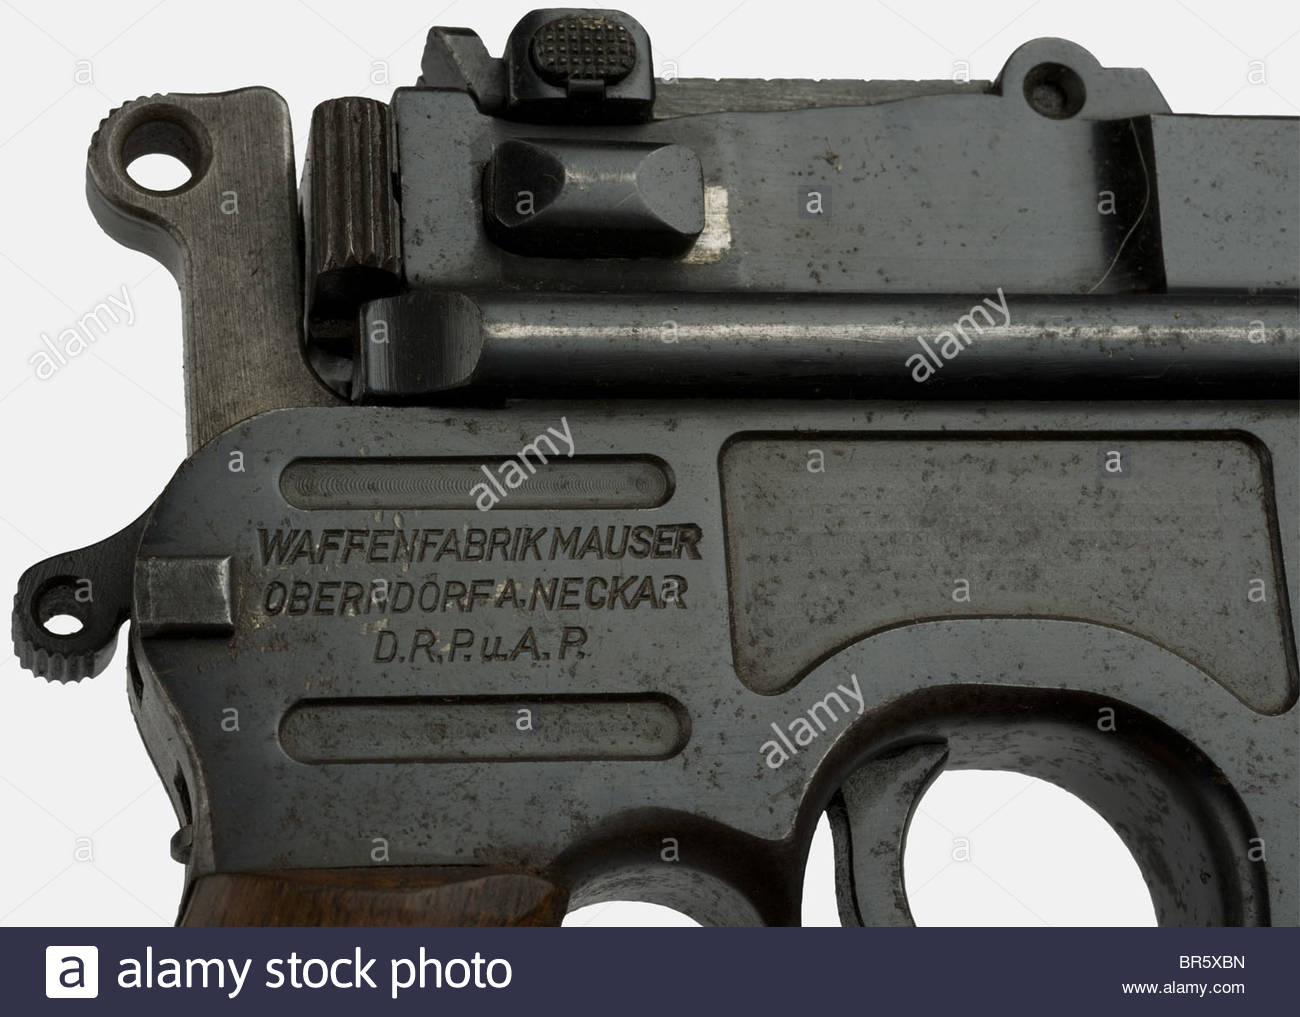 mauser pistol serial numbers